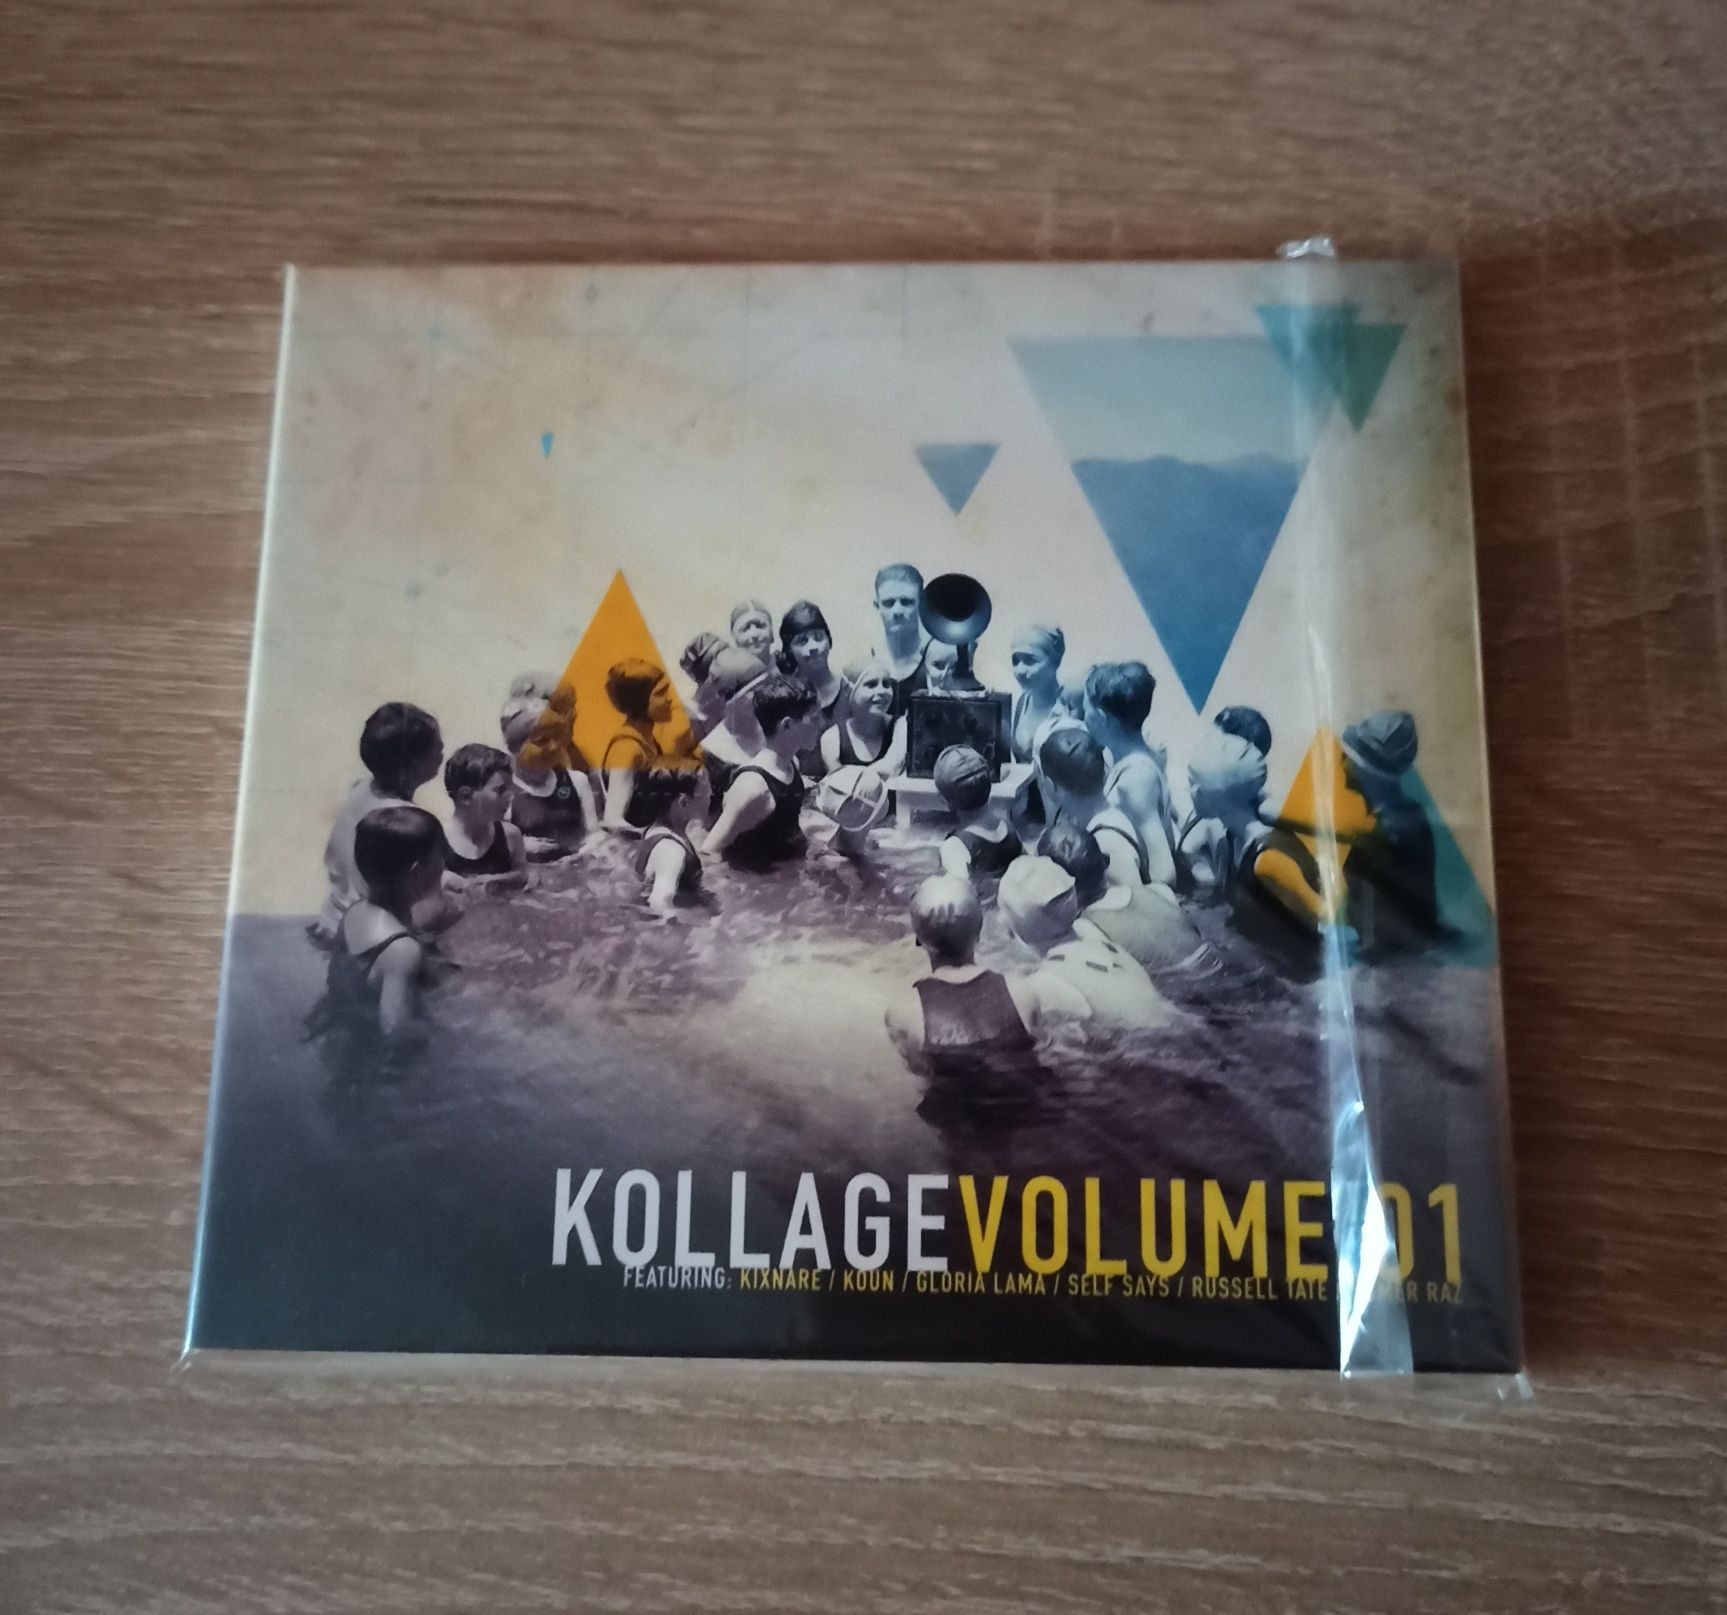 Kixnare - Kollage Volume  357/500